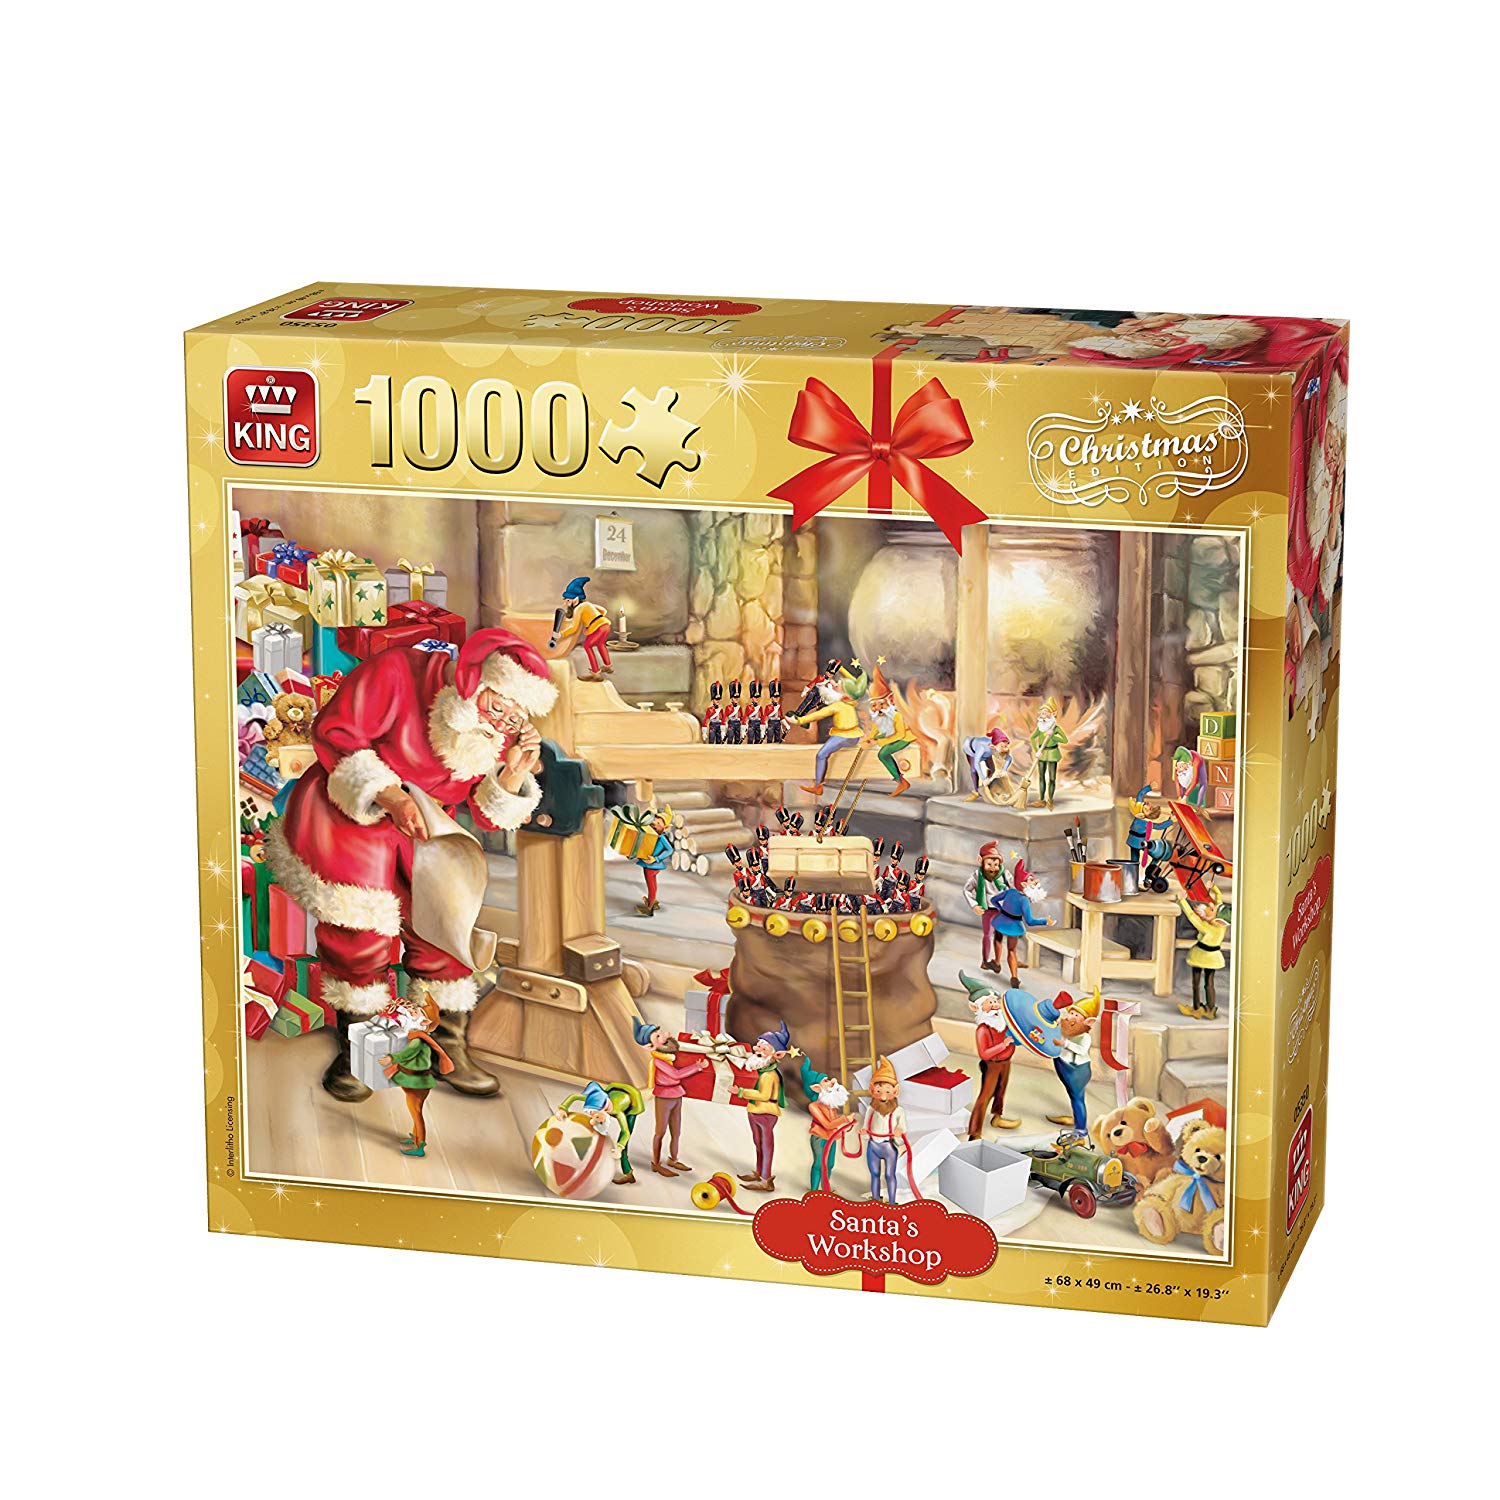 King 1000 Piece Santas Workshop Christmas Jigsaw Puzzle